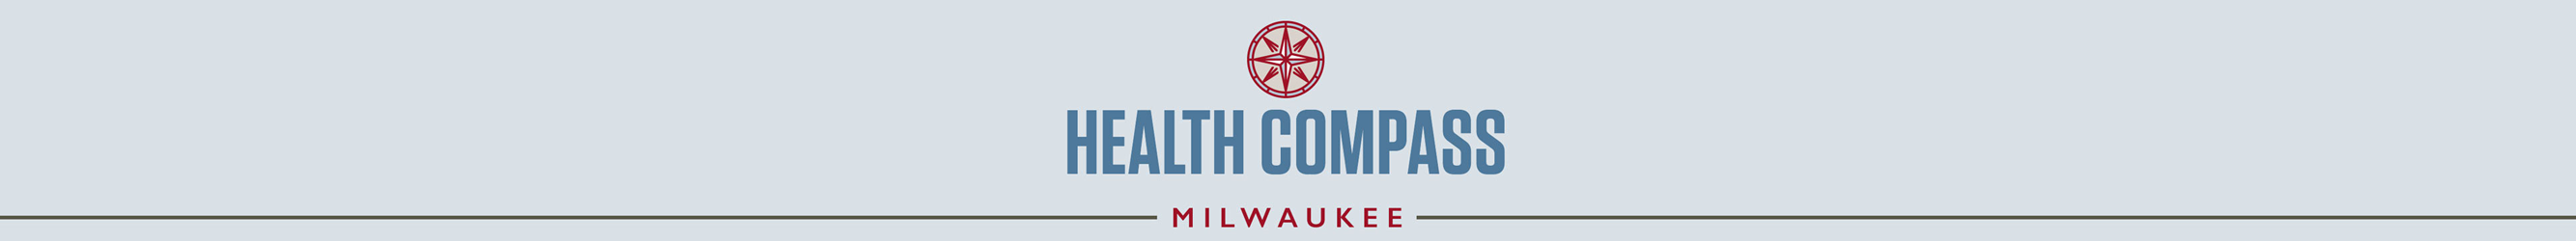 Health Compass Milwaukee